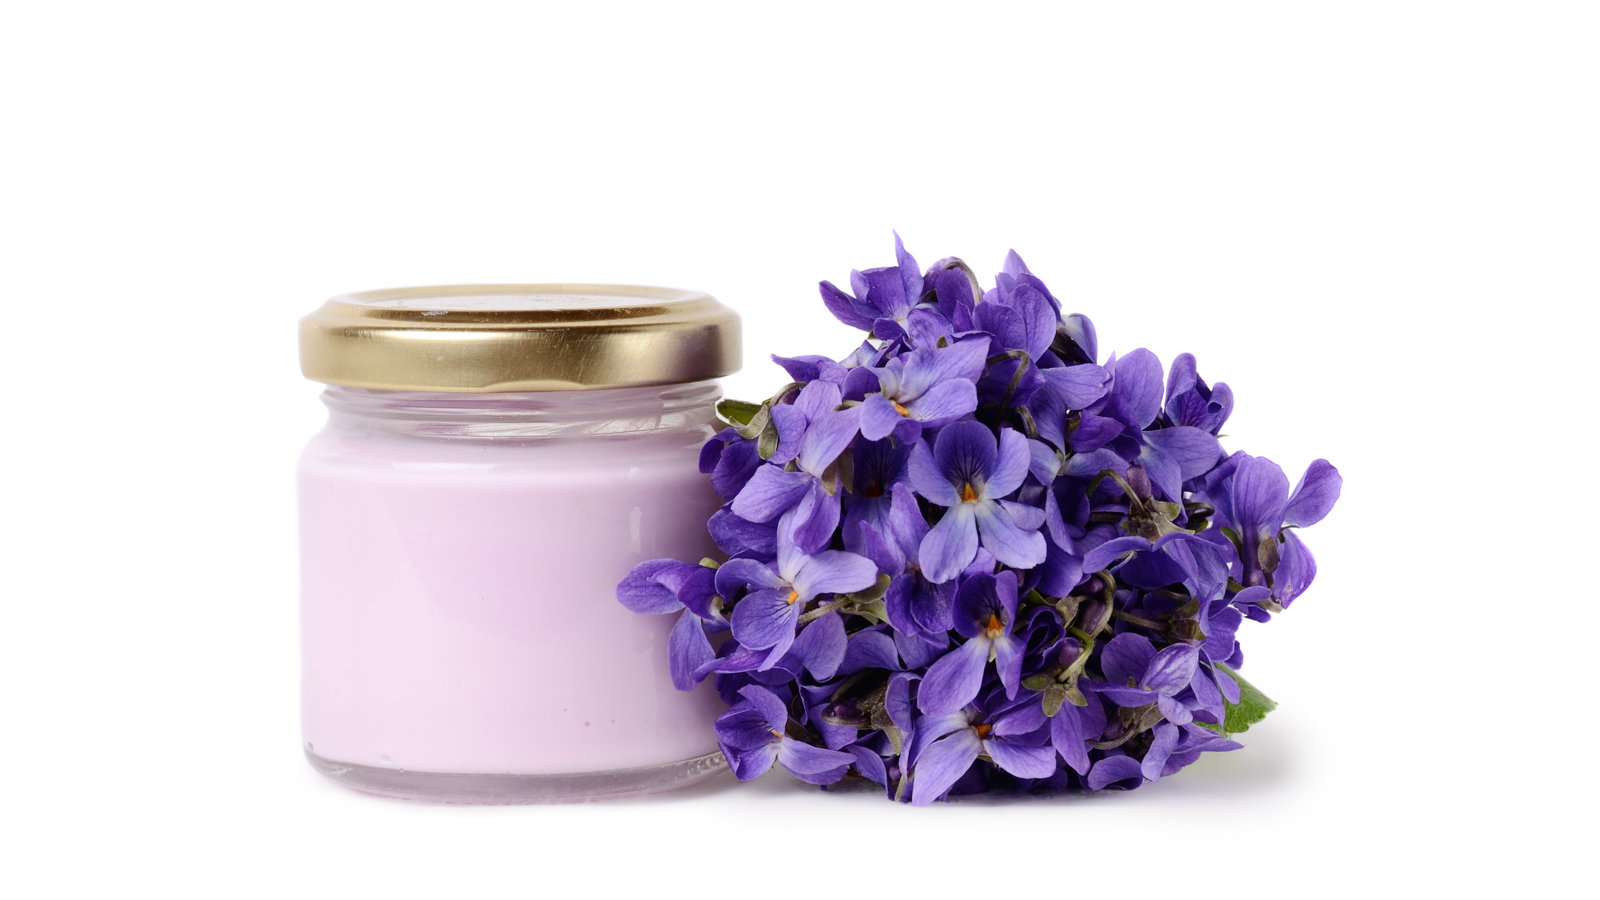 purple lotion and purple flowers